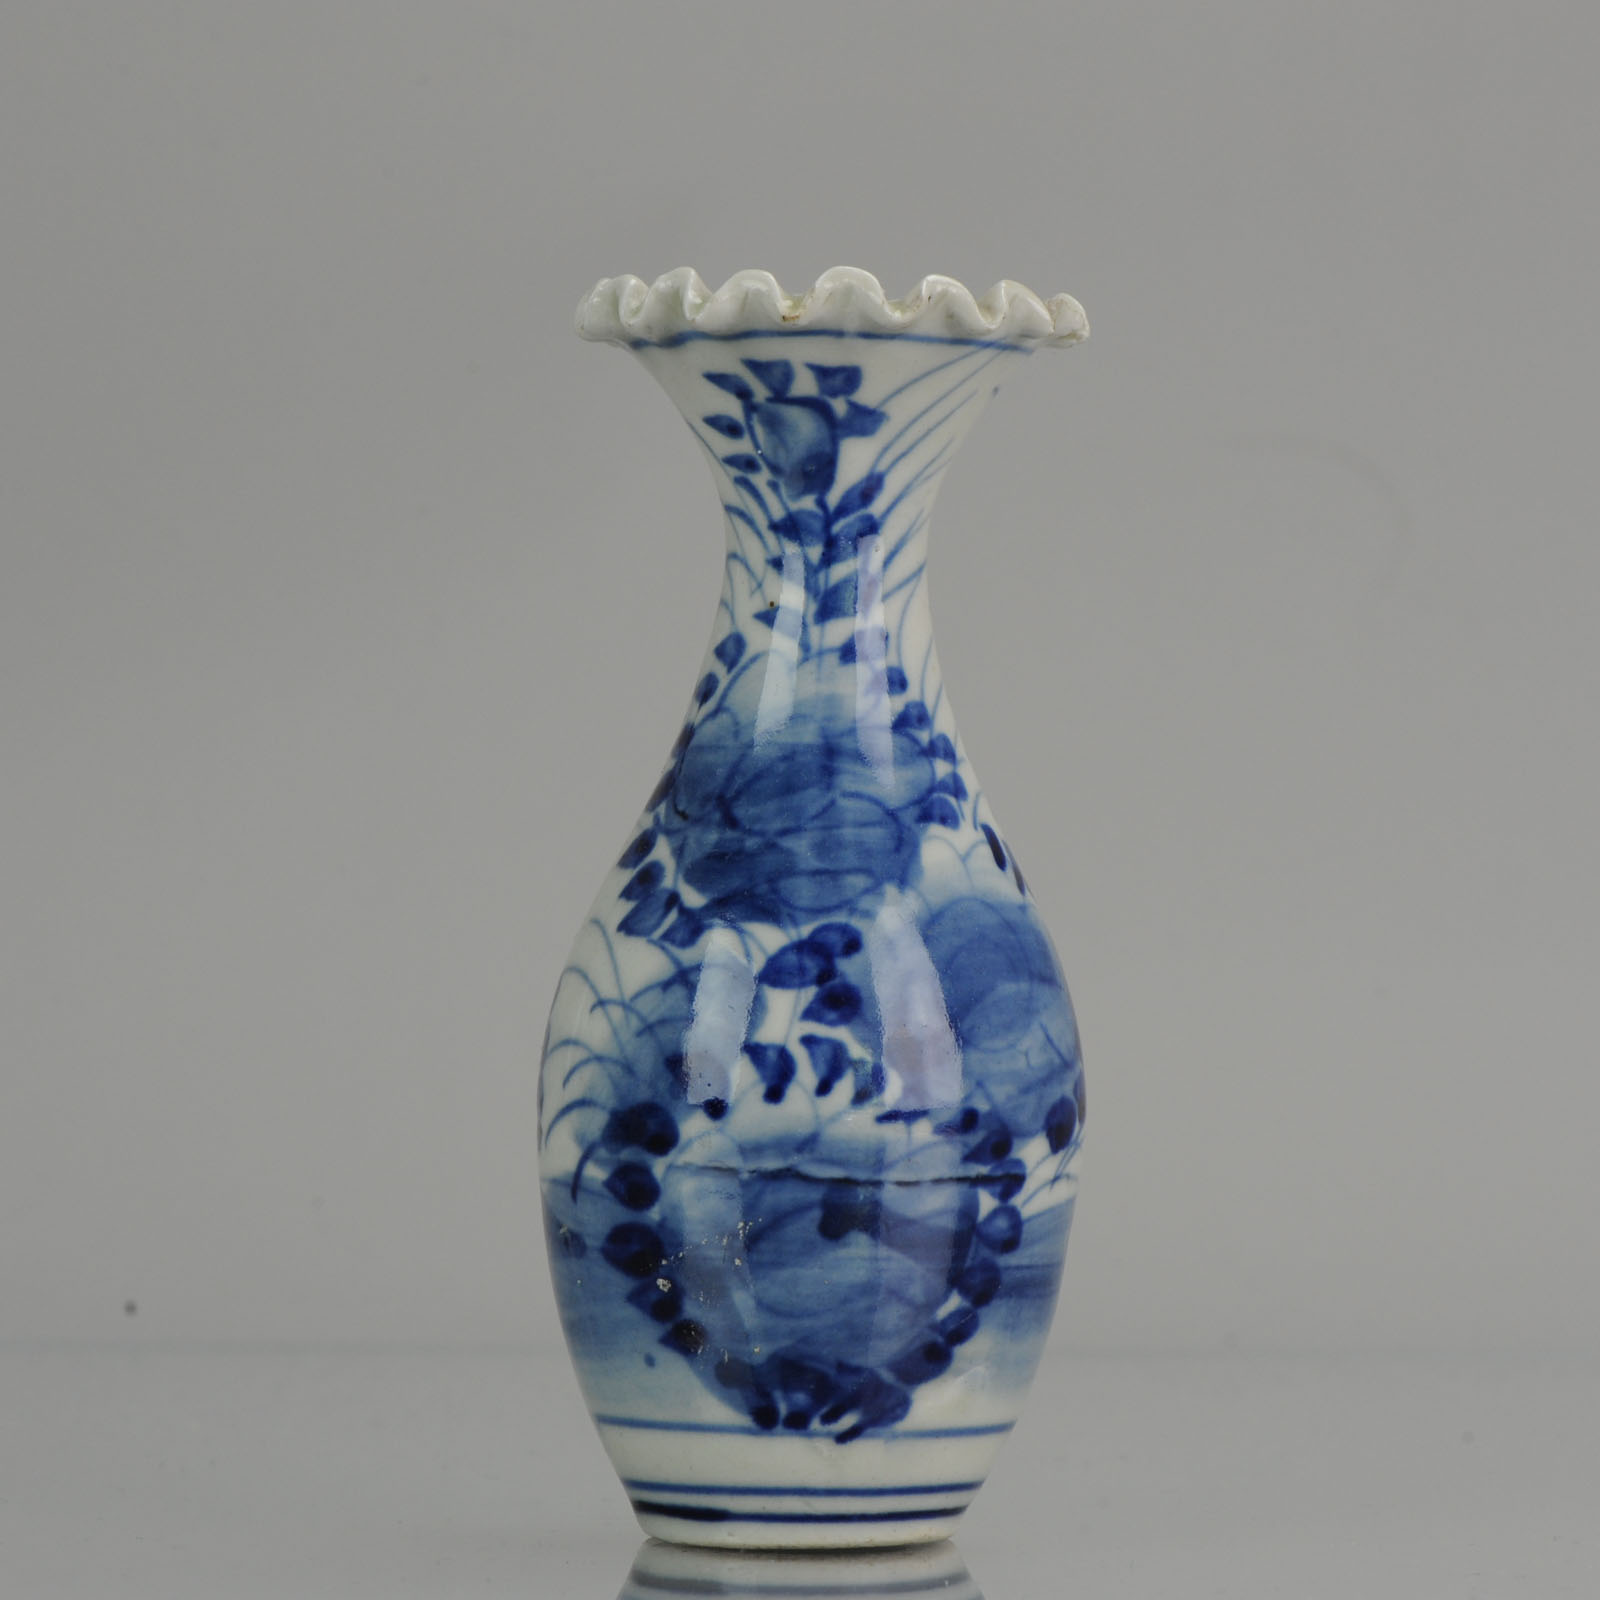 Antique 1880-1900 Lovely Japanese Porcelain Arita vase with flowers